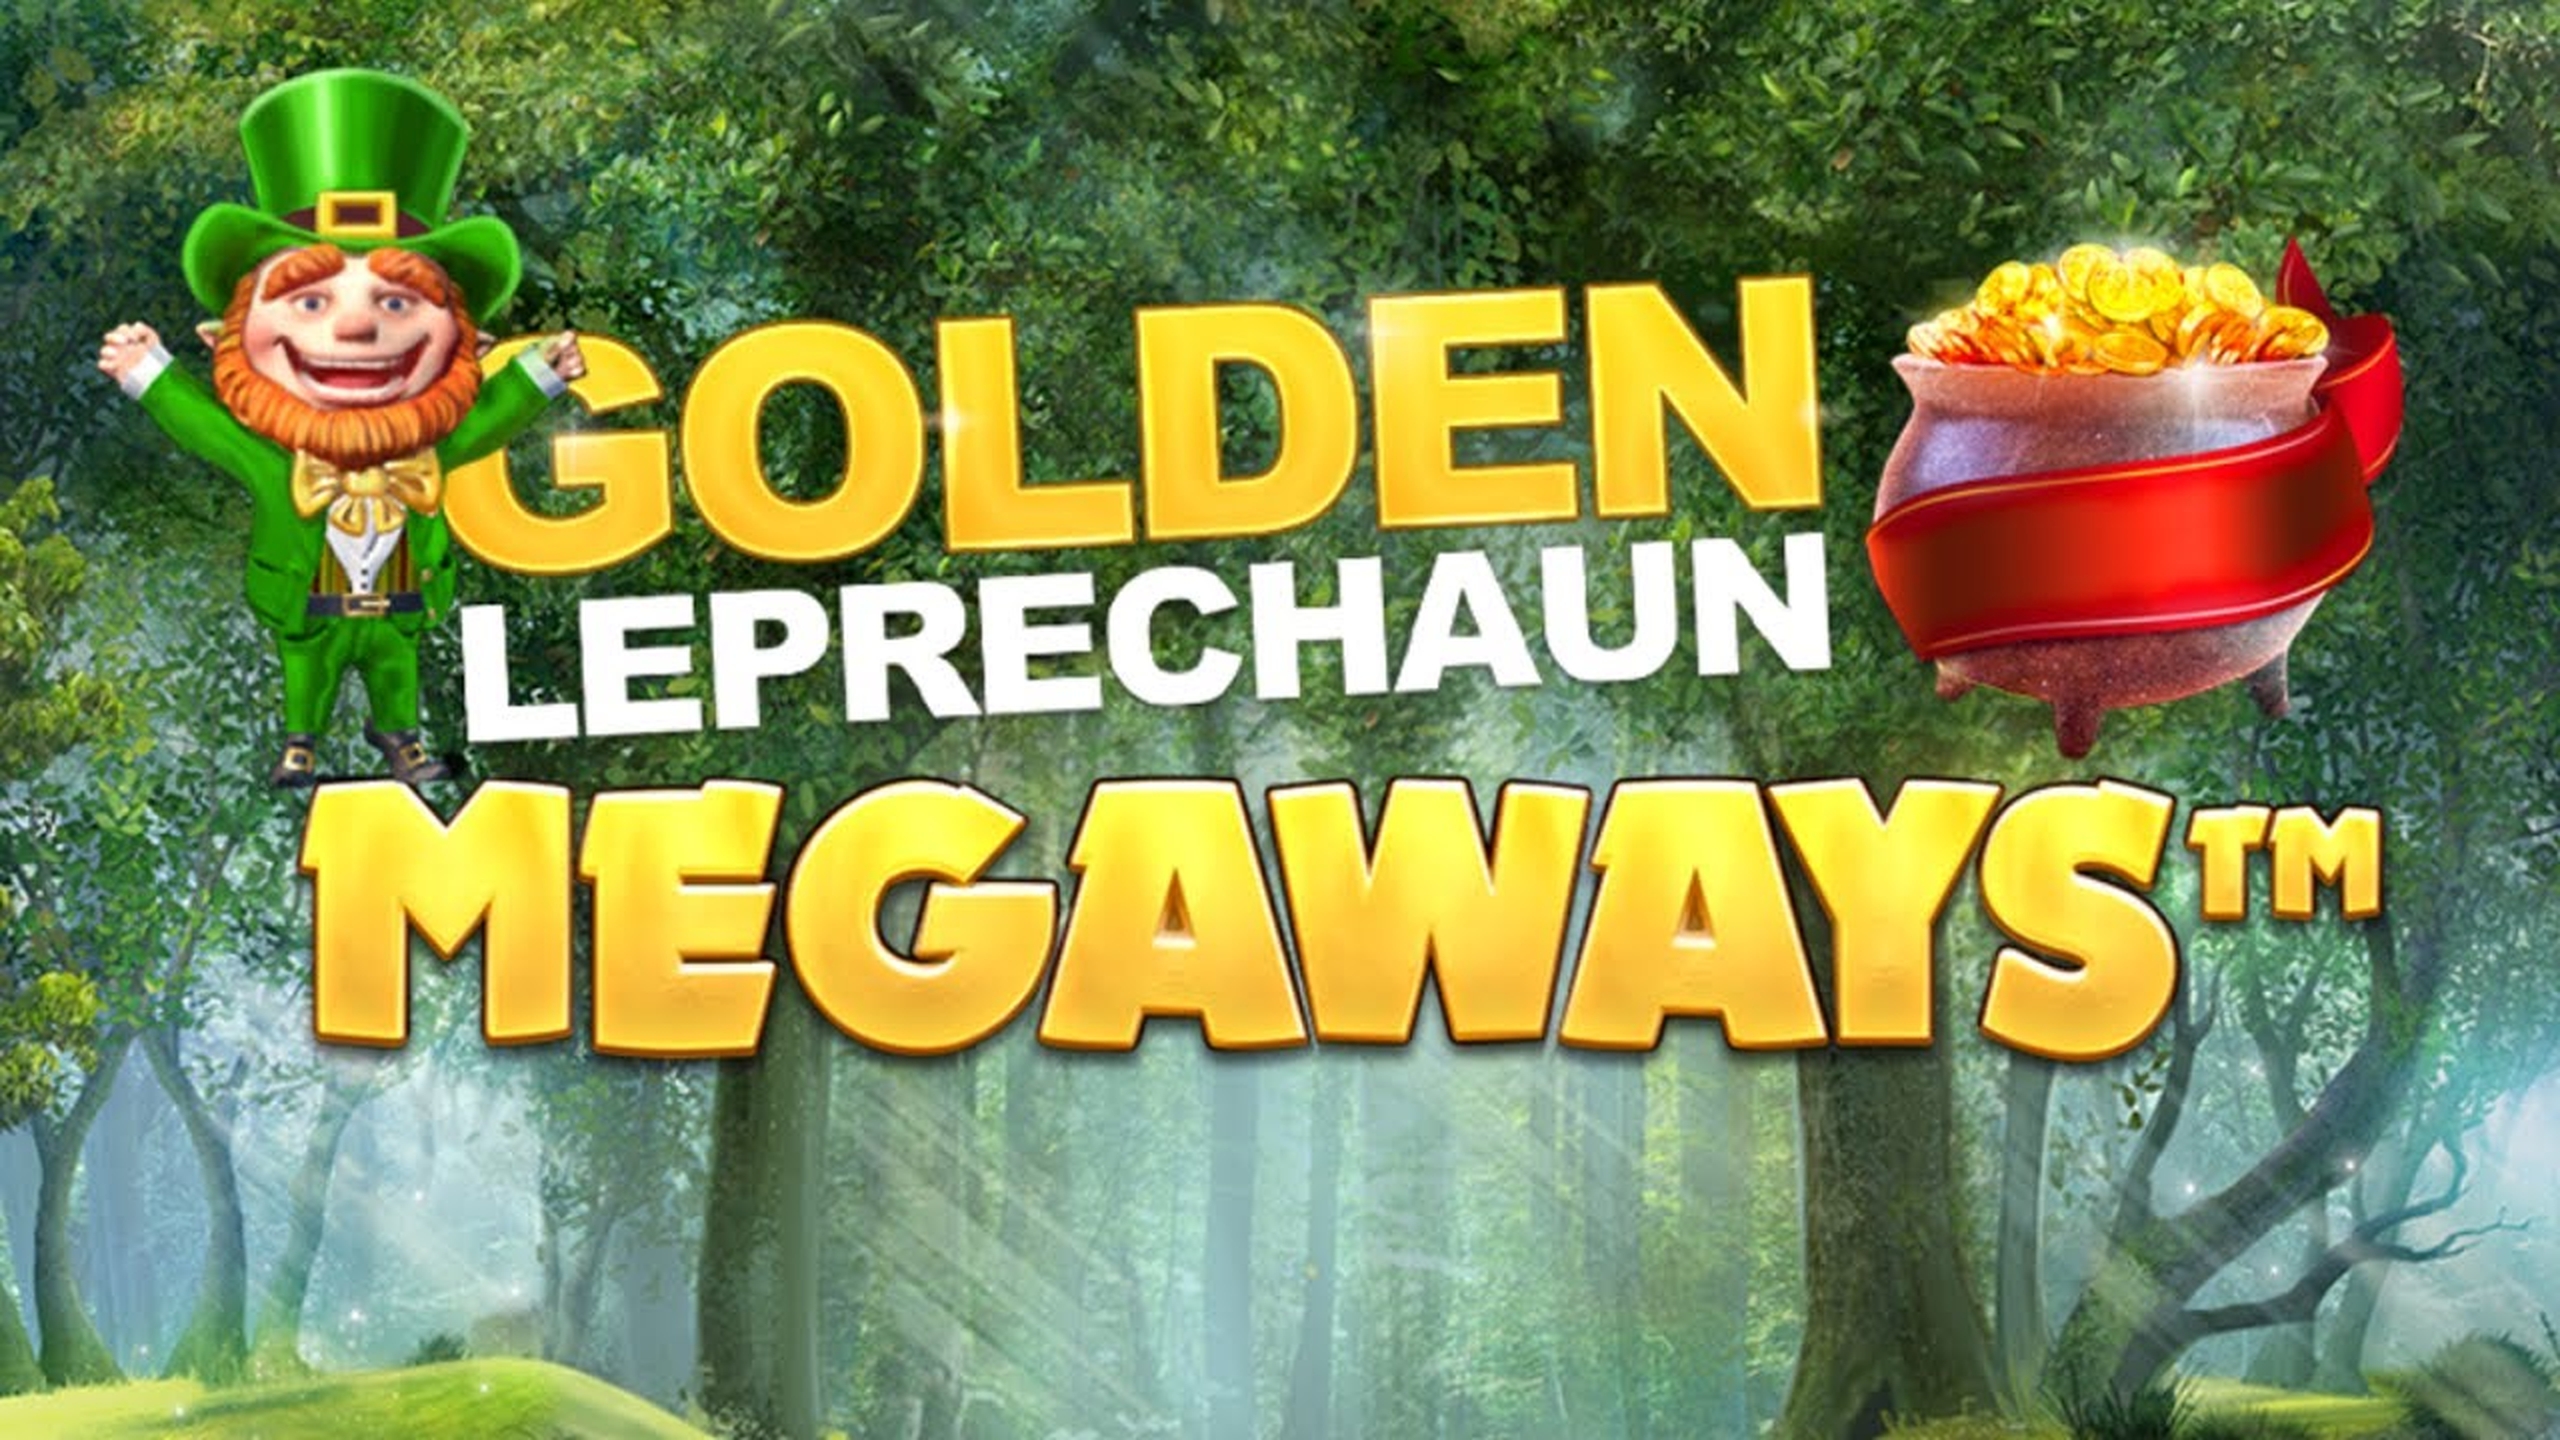 The Golden Leprechaun Megaways Online Slot Demo Game by Red Tiger Gaming